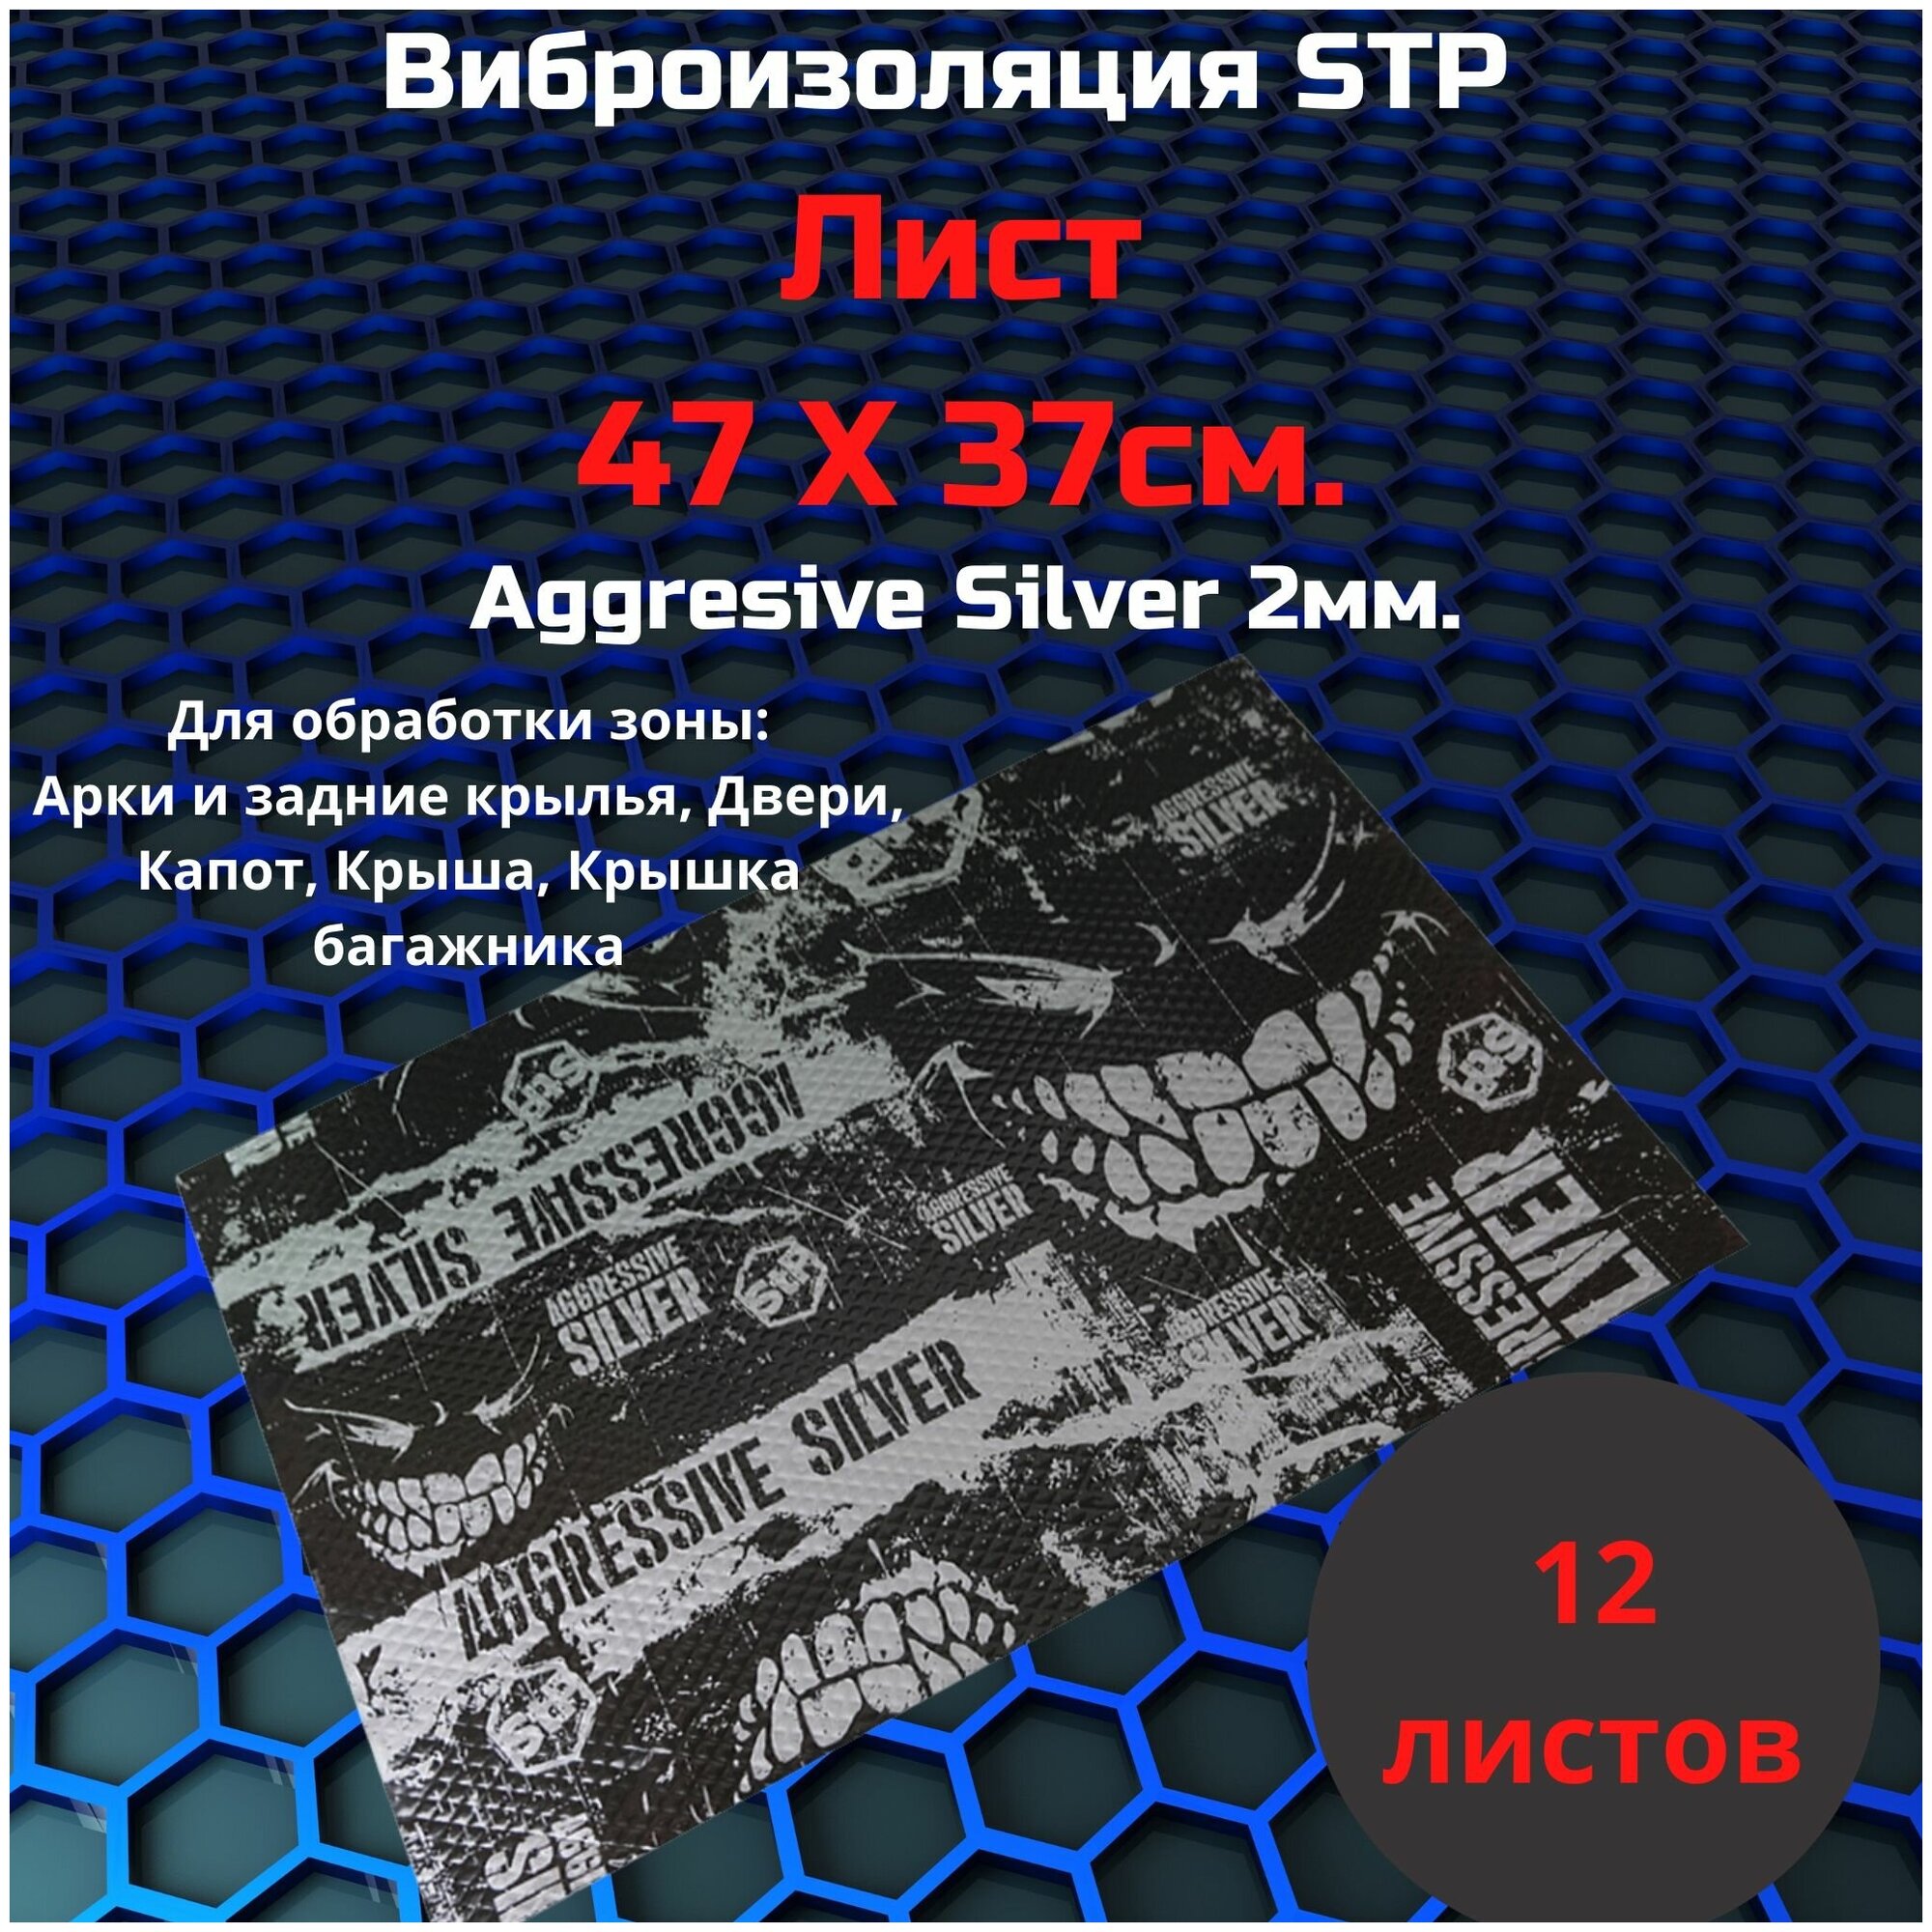 Виброизоляция Stp Aggressive Silver (MINI)/Вибродемпфер СТП Агрессив сильвер мини 12 листов.(375*47)